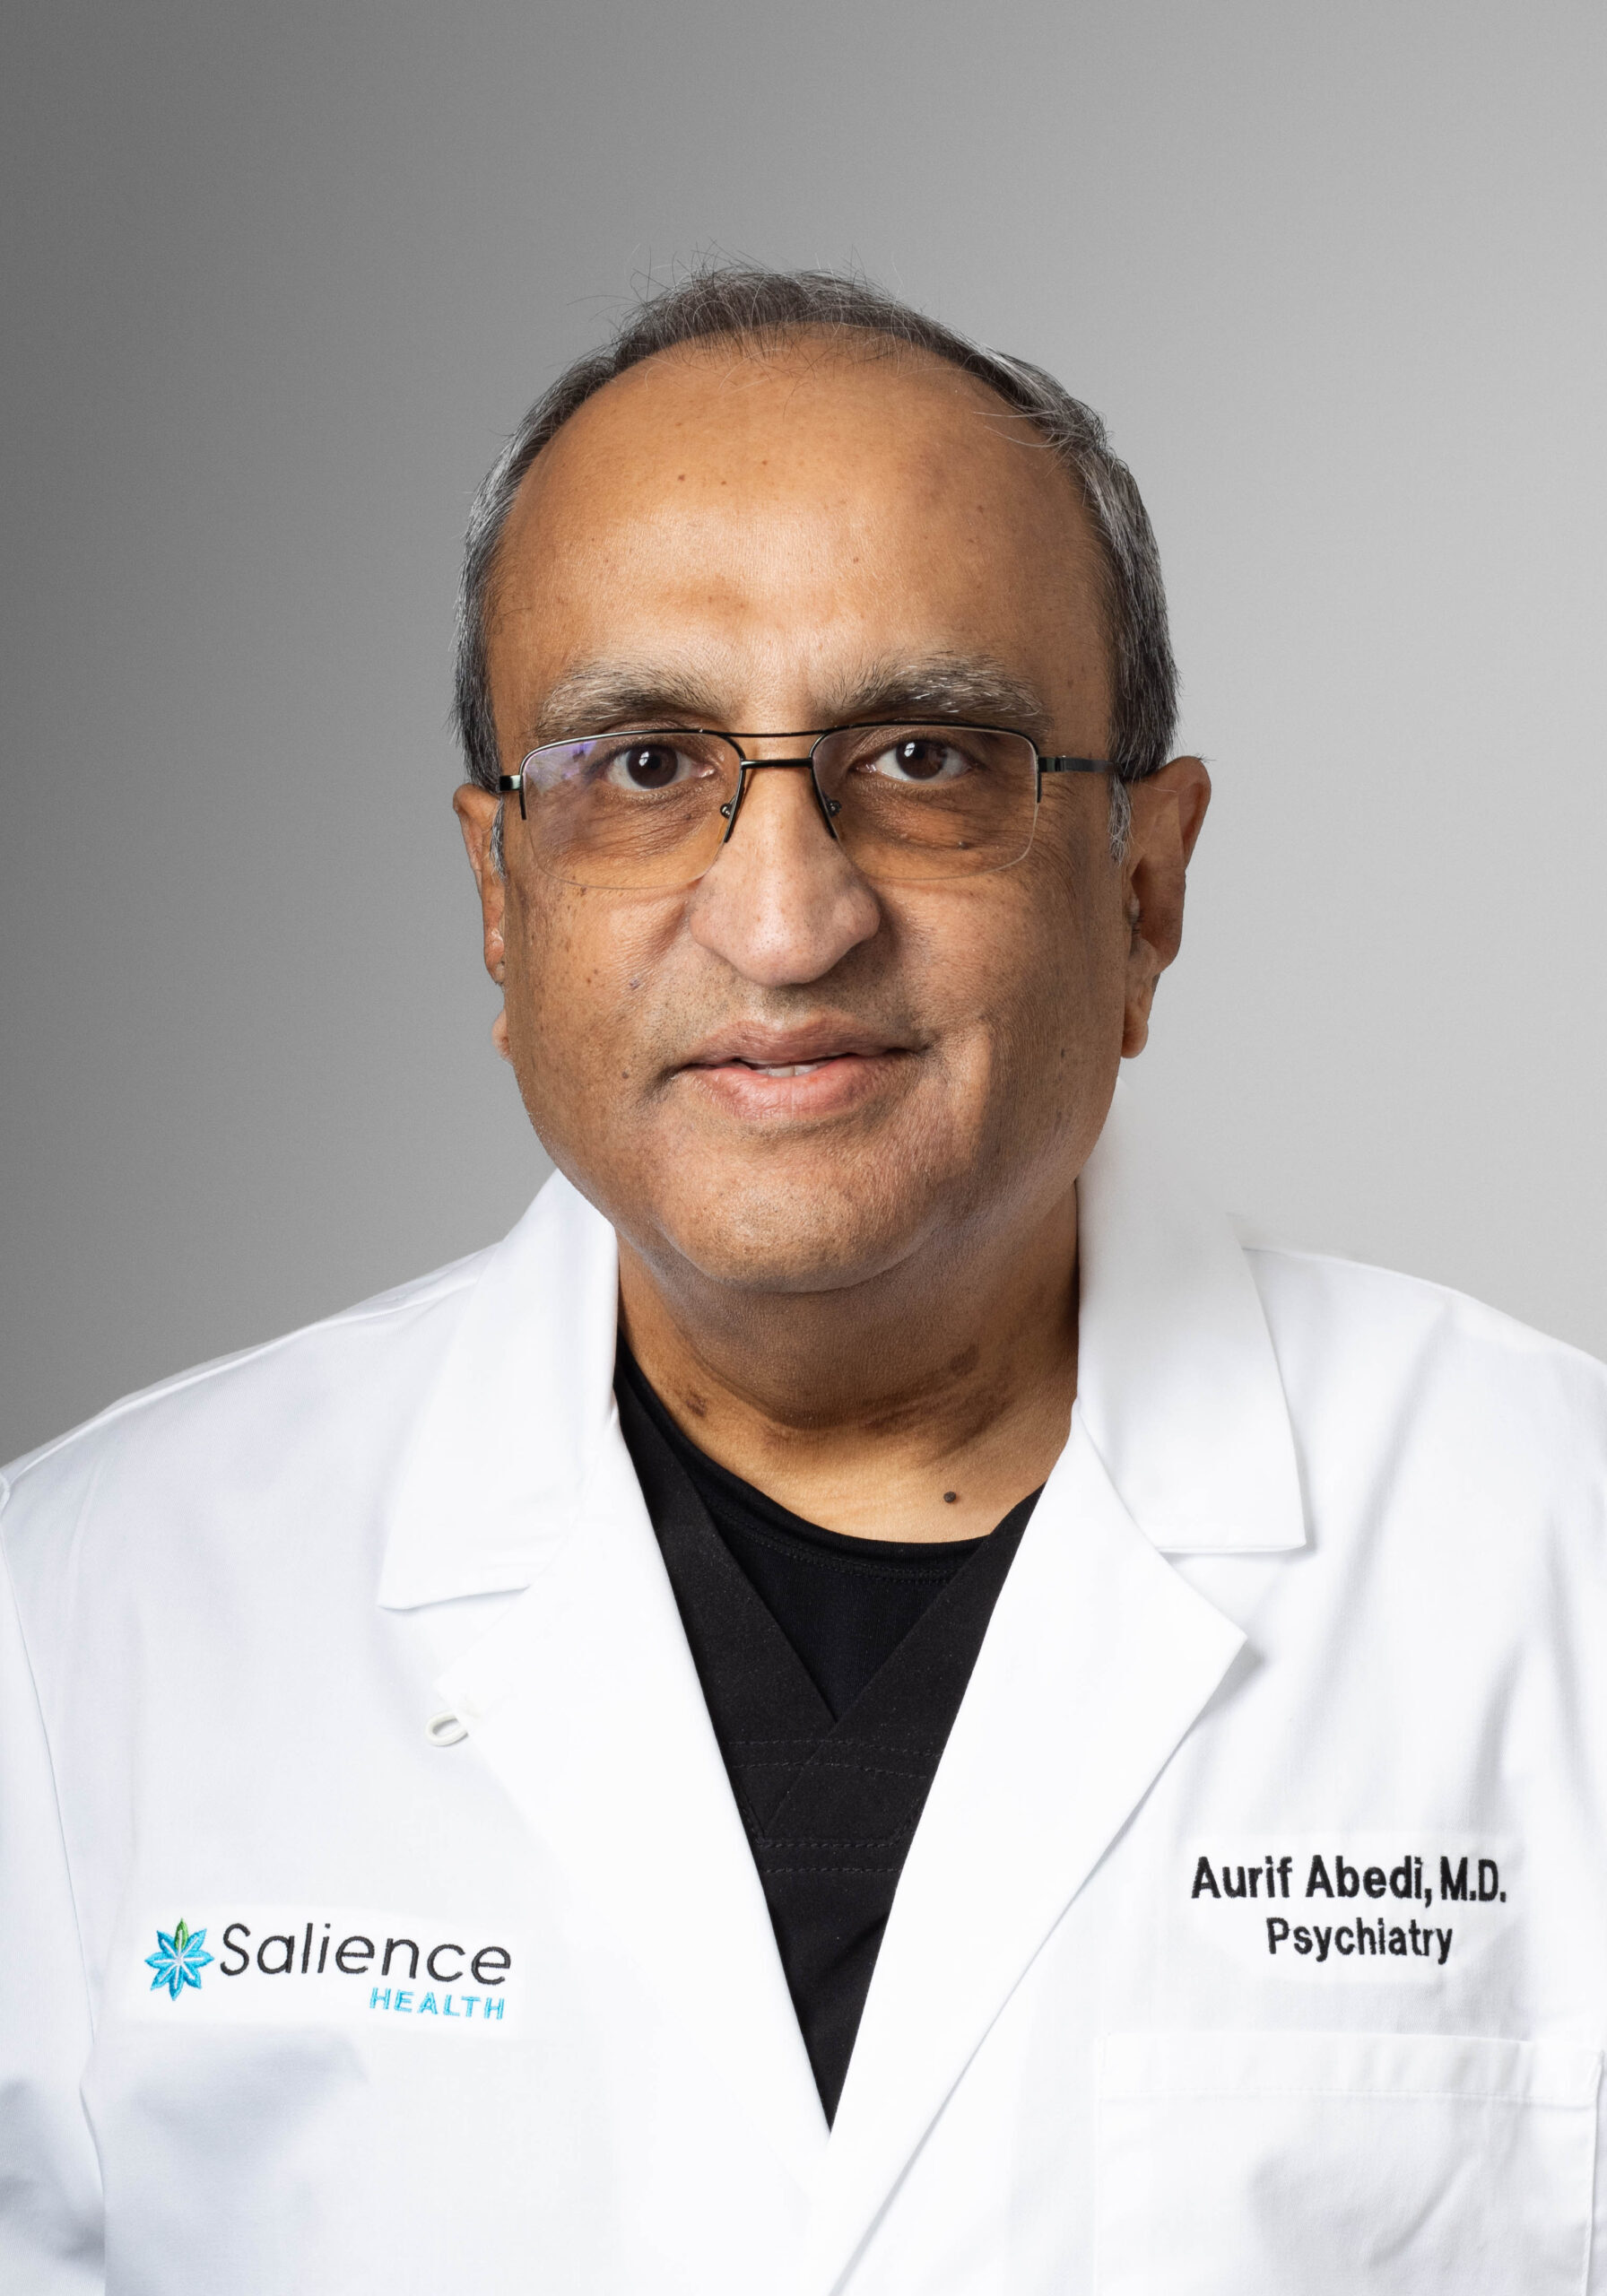 Dr. Aurif Abedi, Psychiatrist at Salience Health